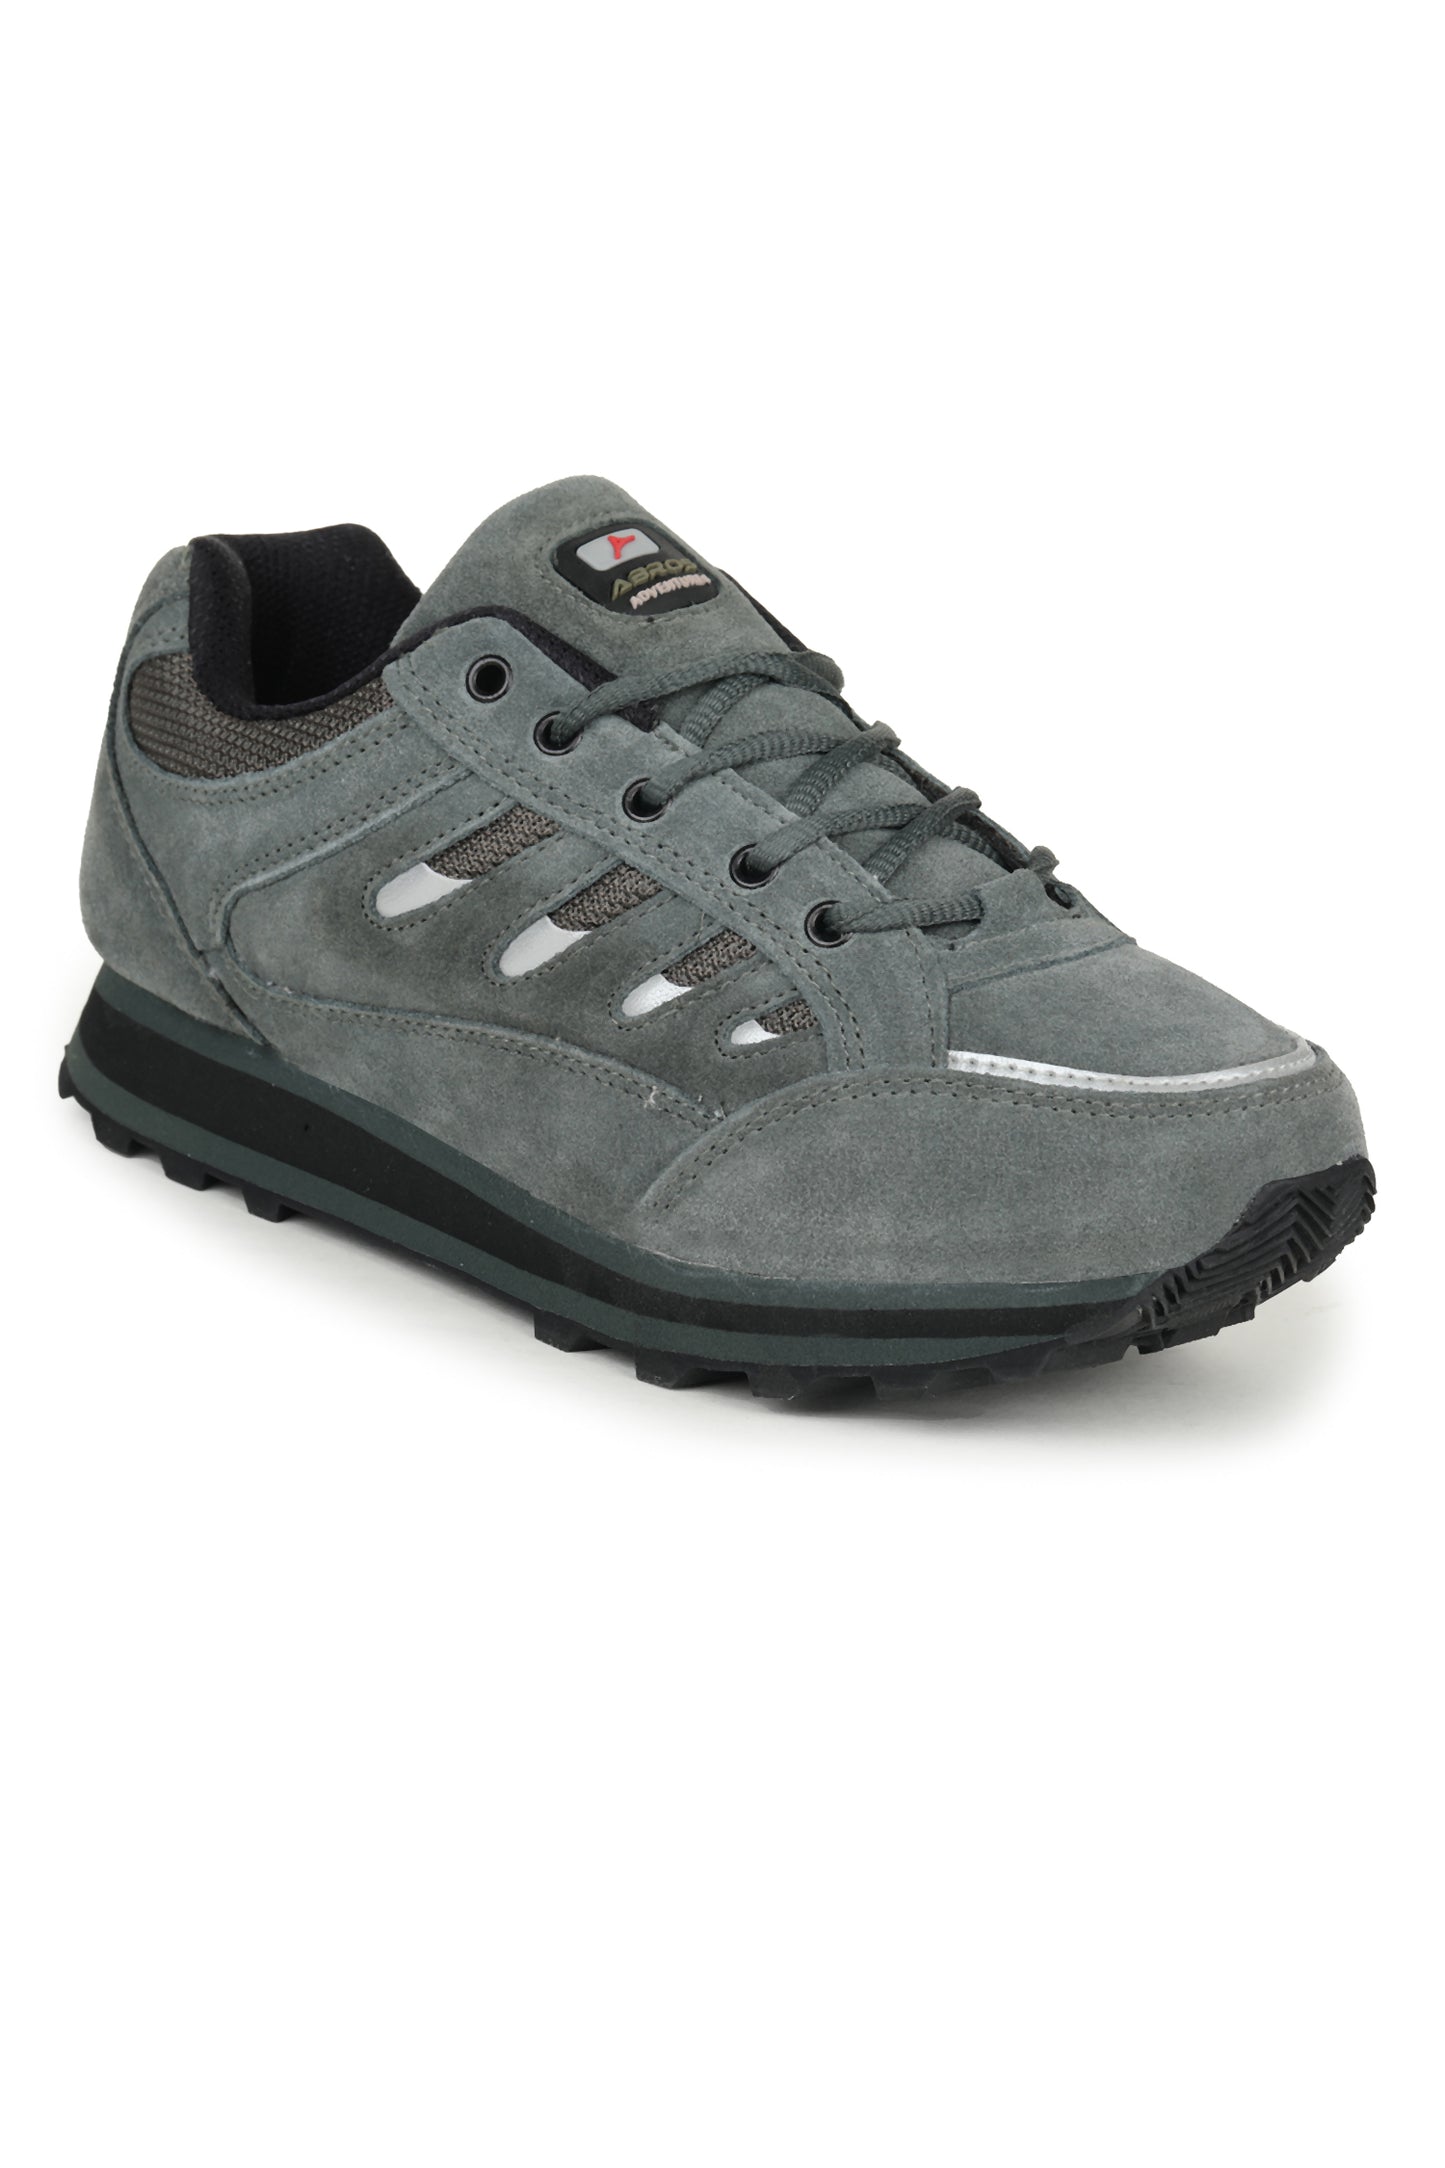 Jogger-3O Outdoor-Shoes For Men's